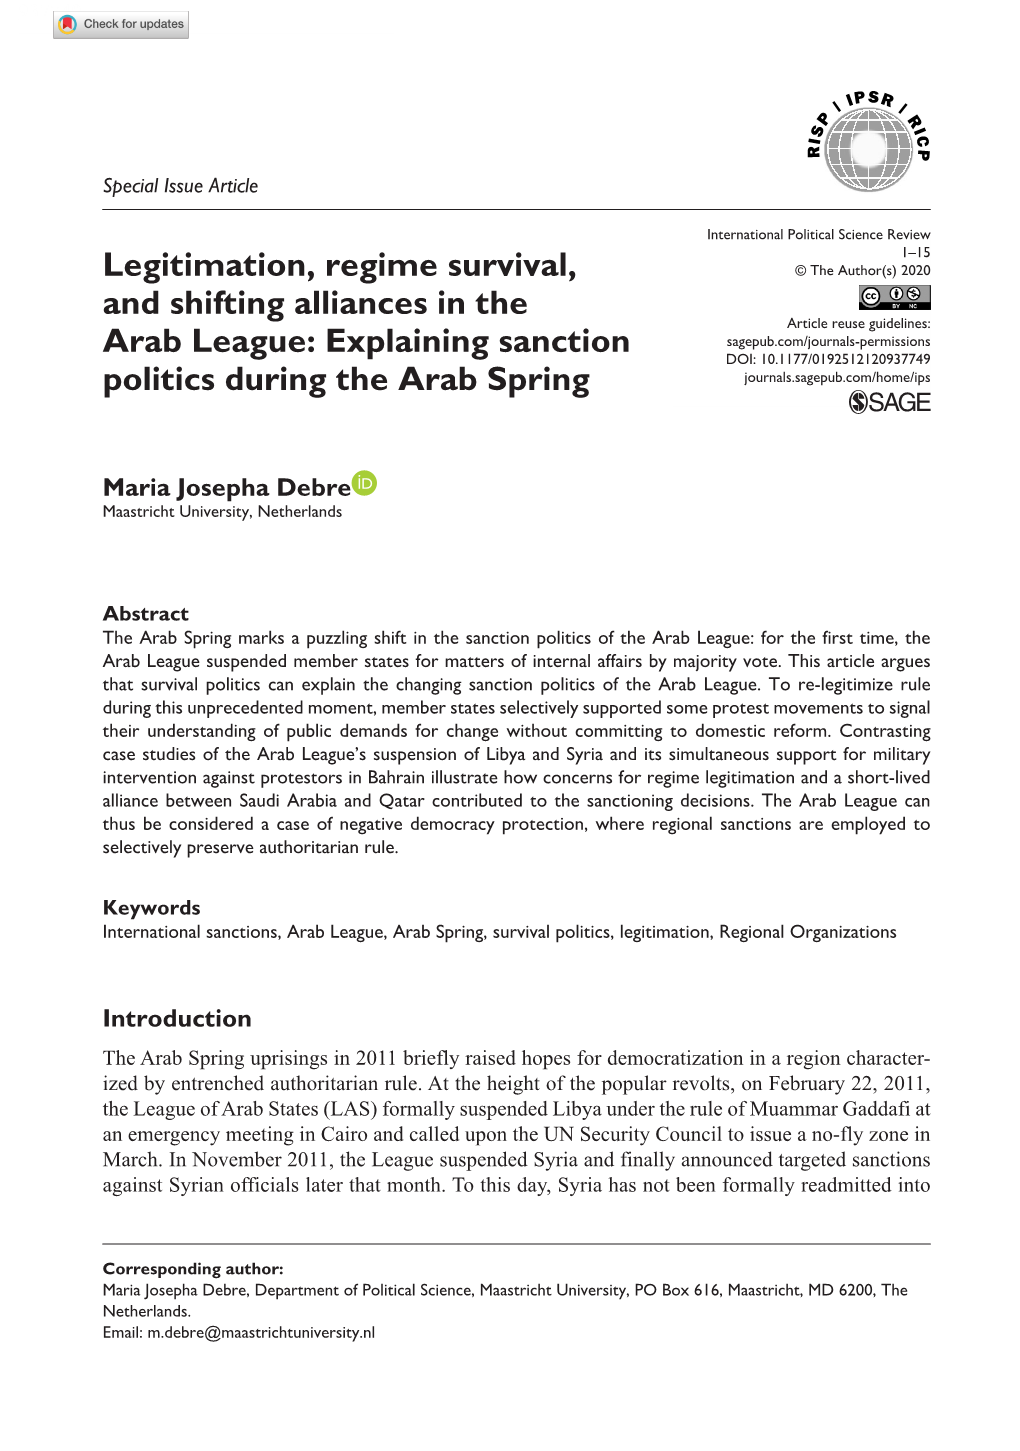 Explaining Sanction Politics During the Arab Spring